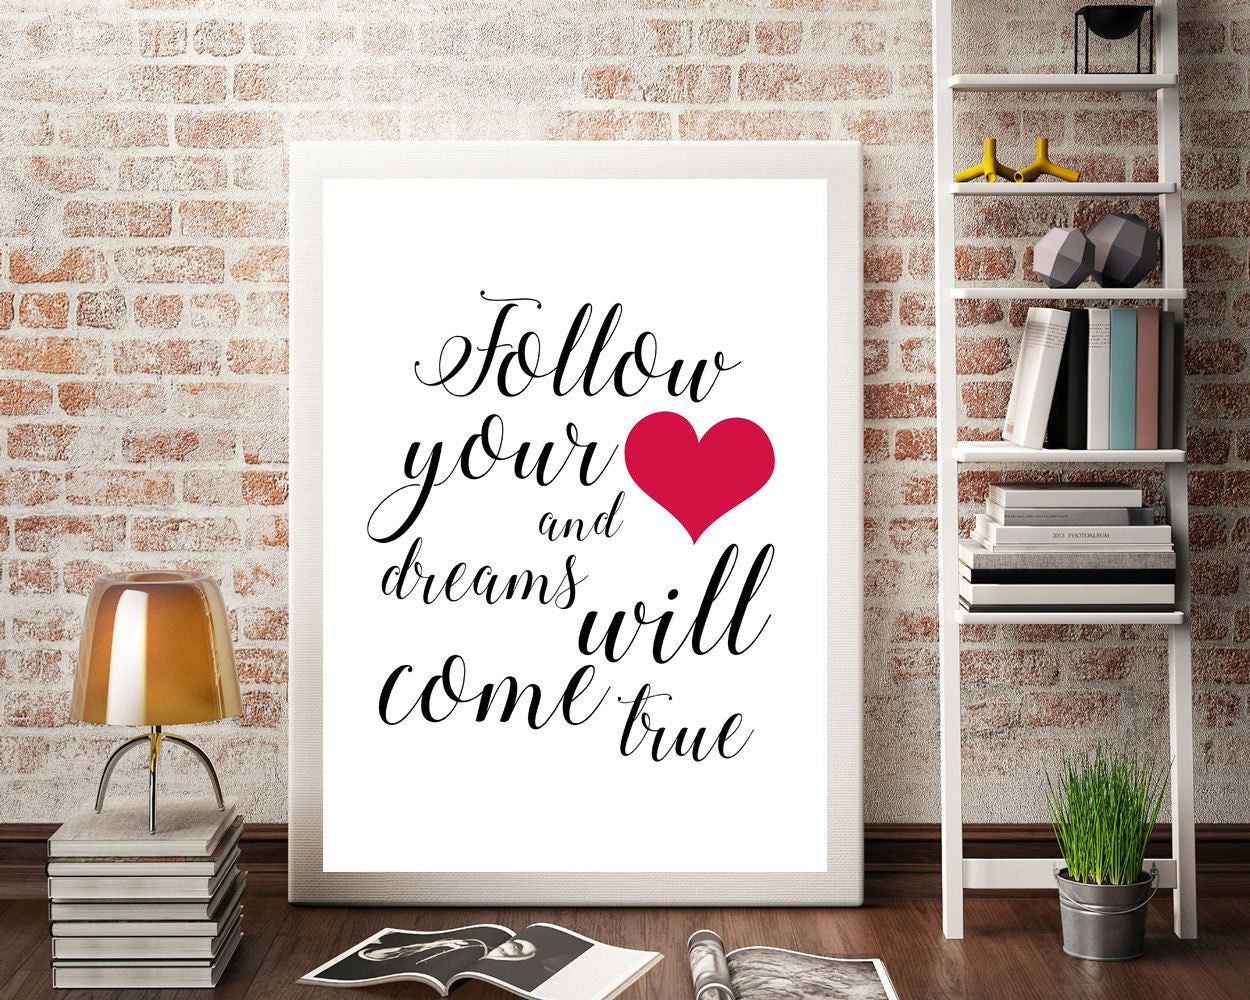 Wall Decor Follow Your Heart Printable Follow Your Heart Prints Follow Your Heart Sign Follow Your Heart Inspirational Art Follow Your Heart - Digital Download